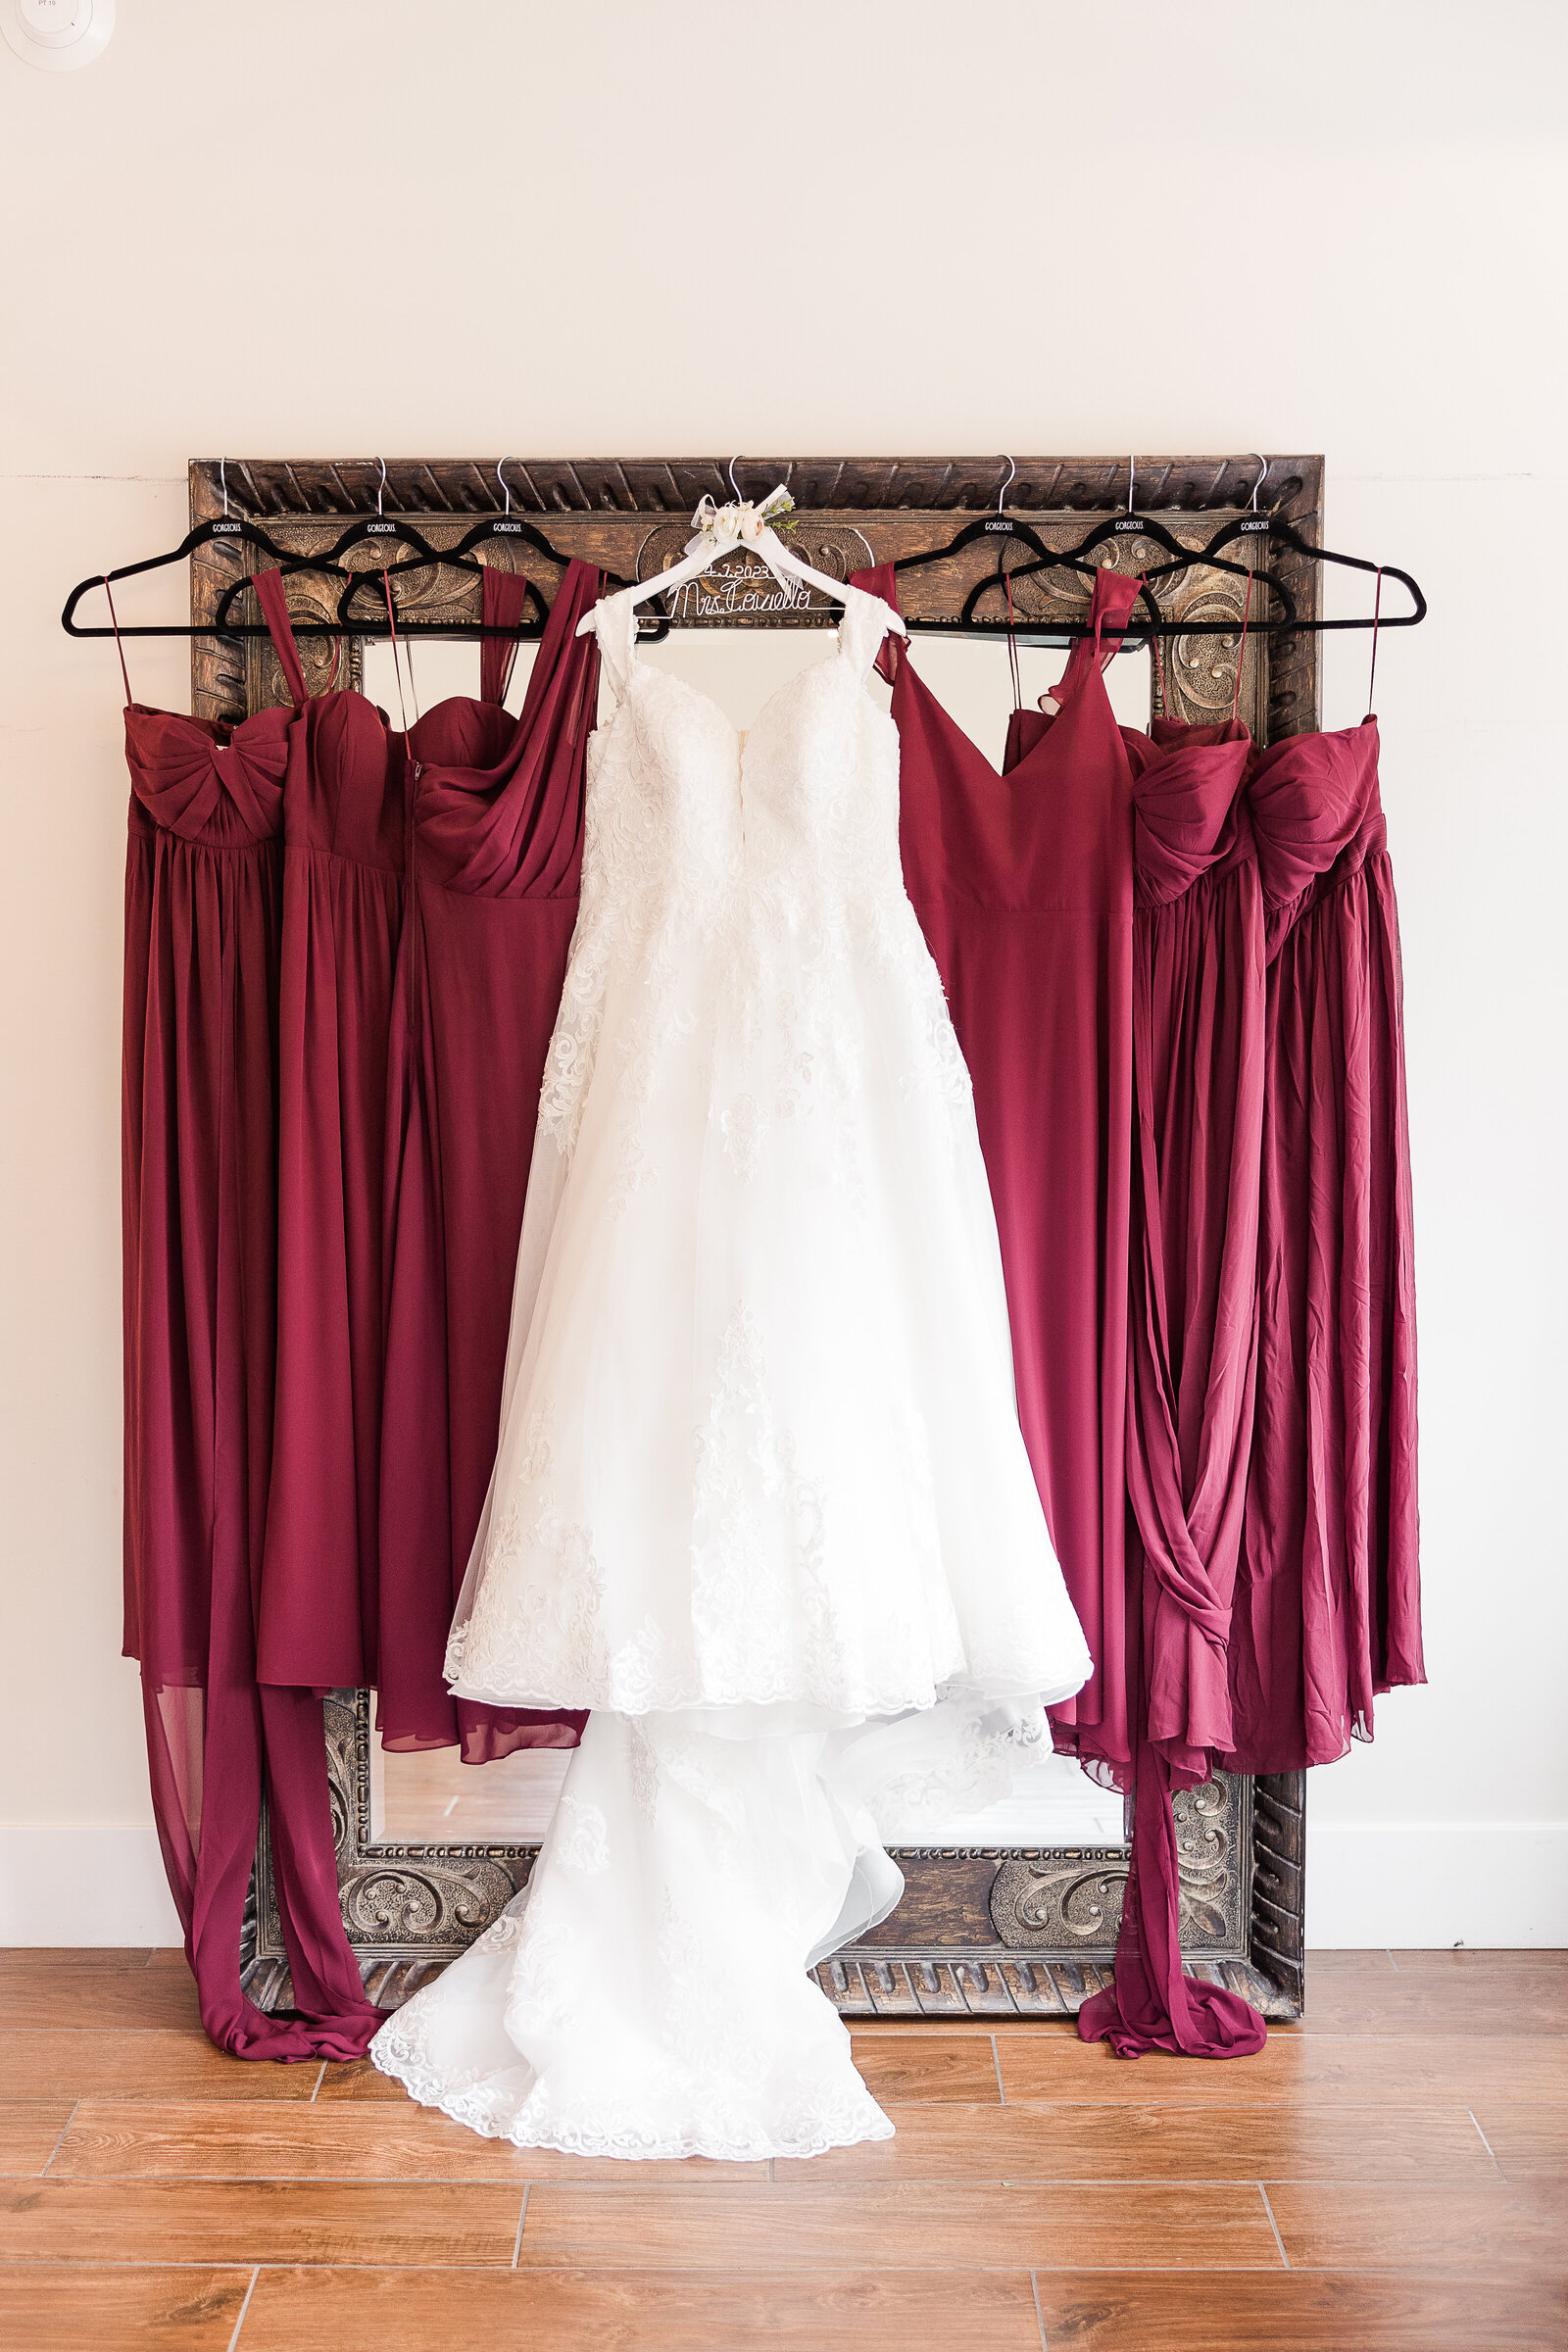 Wedding and bridesmaid dresses